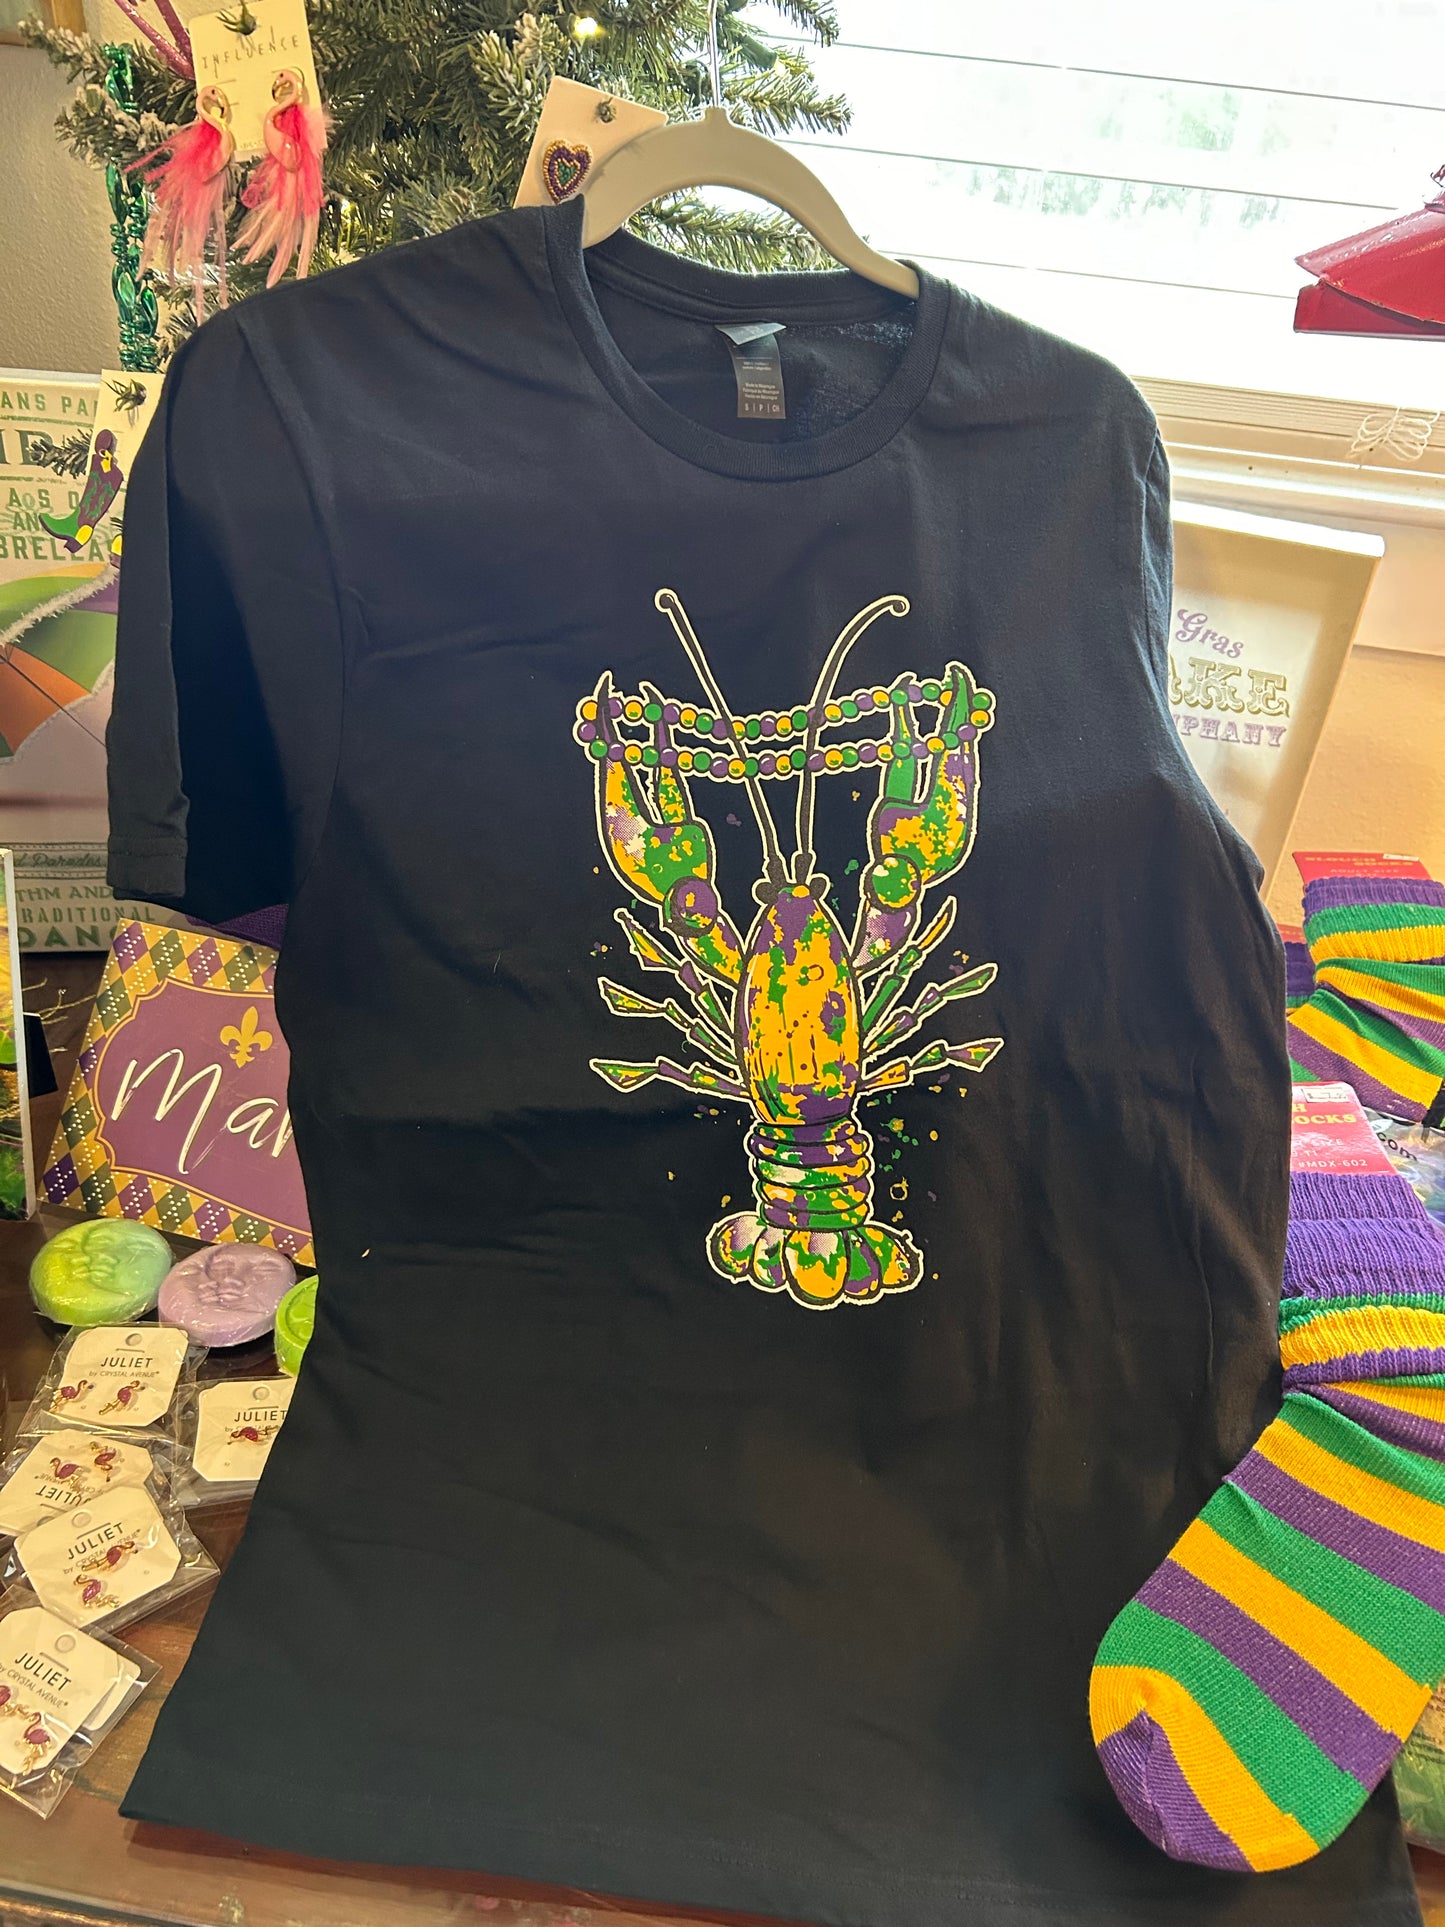 Black short sleeve shirt with Mardi Gras crawfish